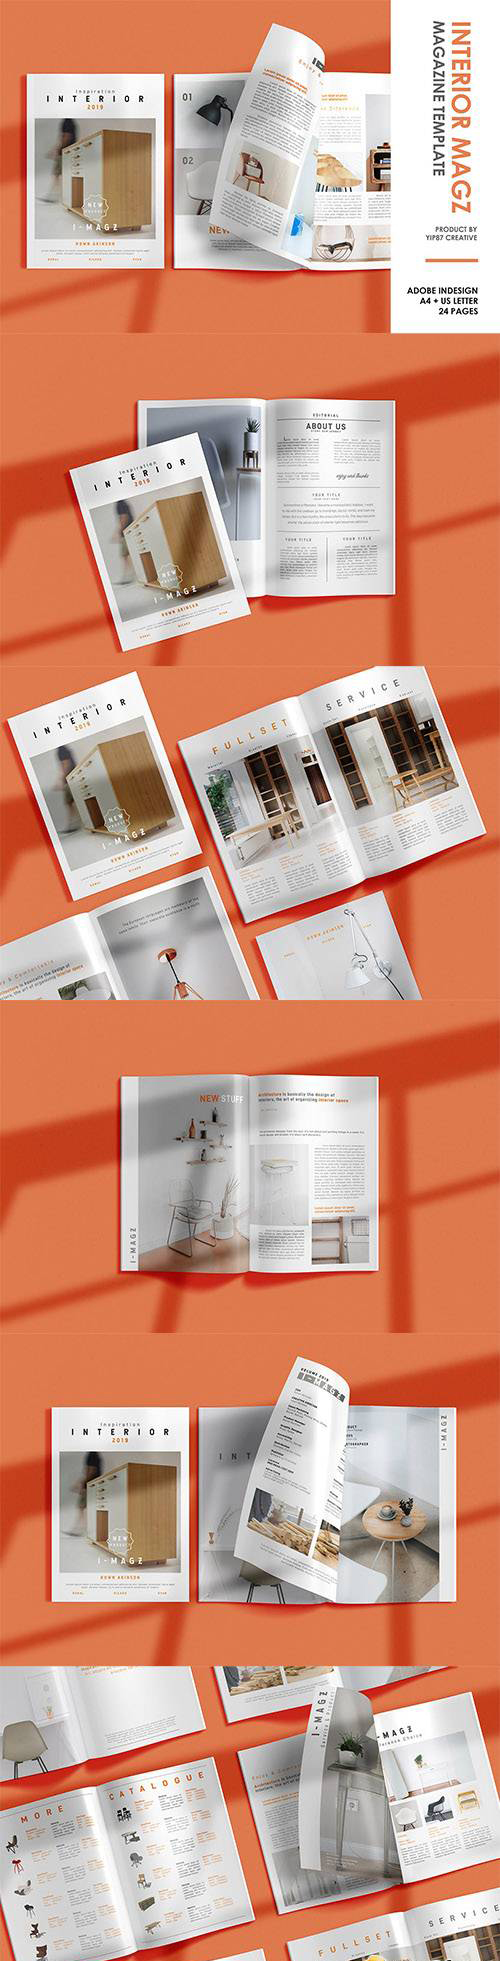 时尚简约室内家具杂志画册模板 Fashion Simple Interior Furniture Magazine Album Template插图